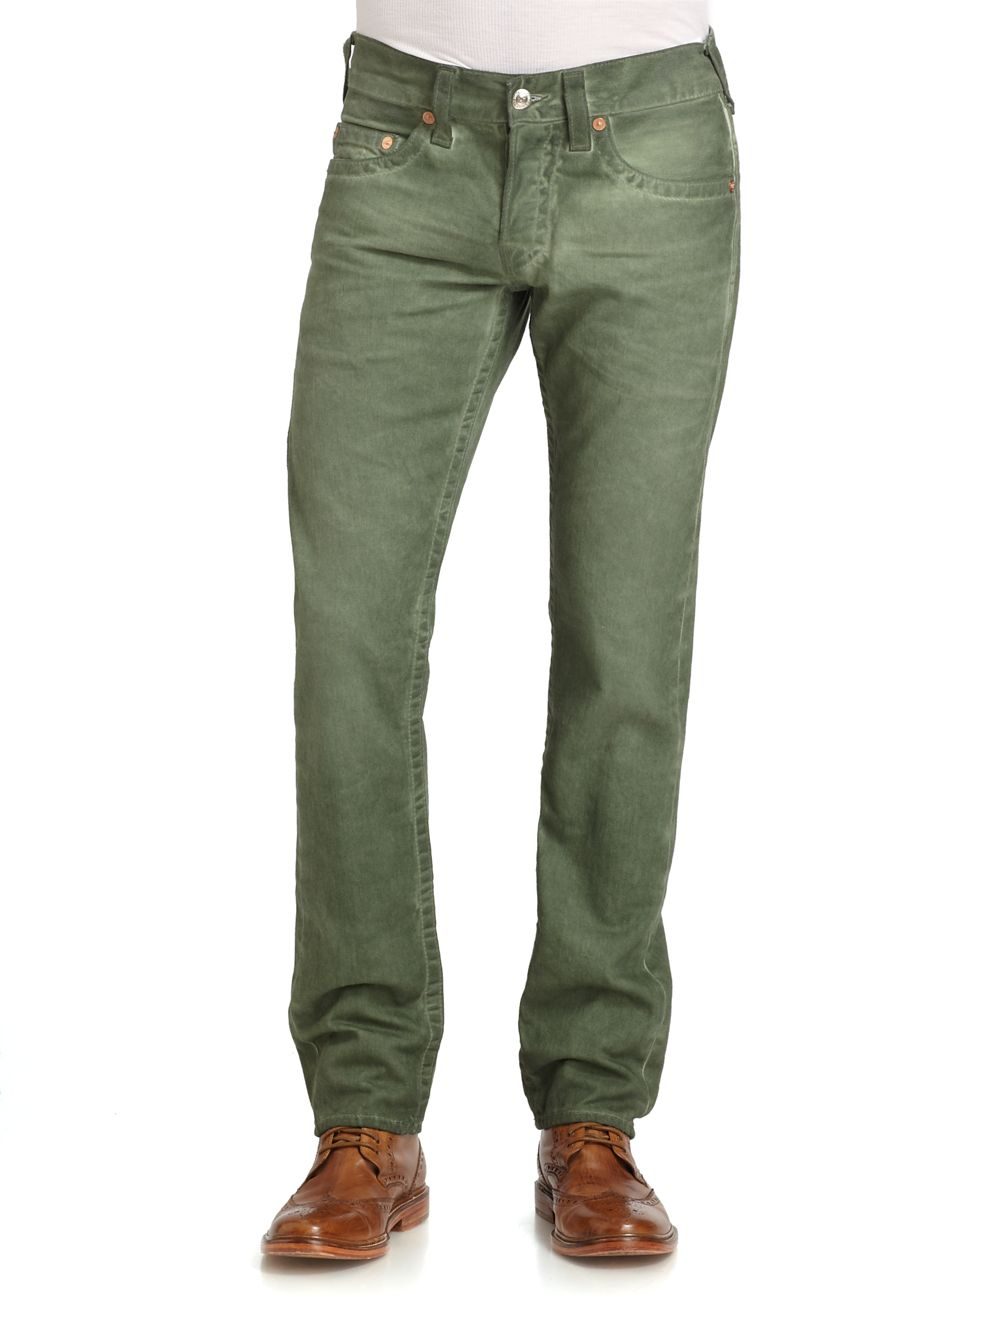 True Religion Coldpressed Cotton Denim Jeans in Green for Men - Lyst